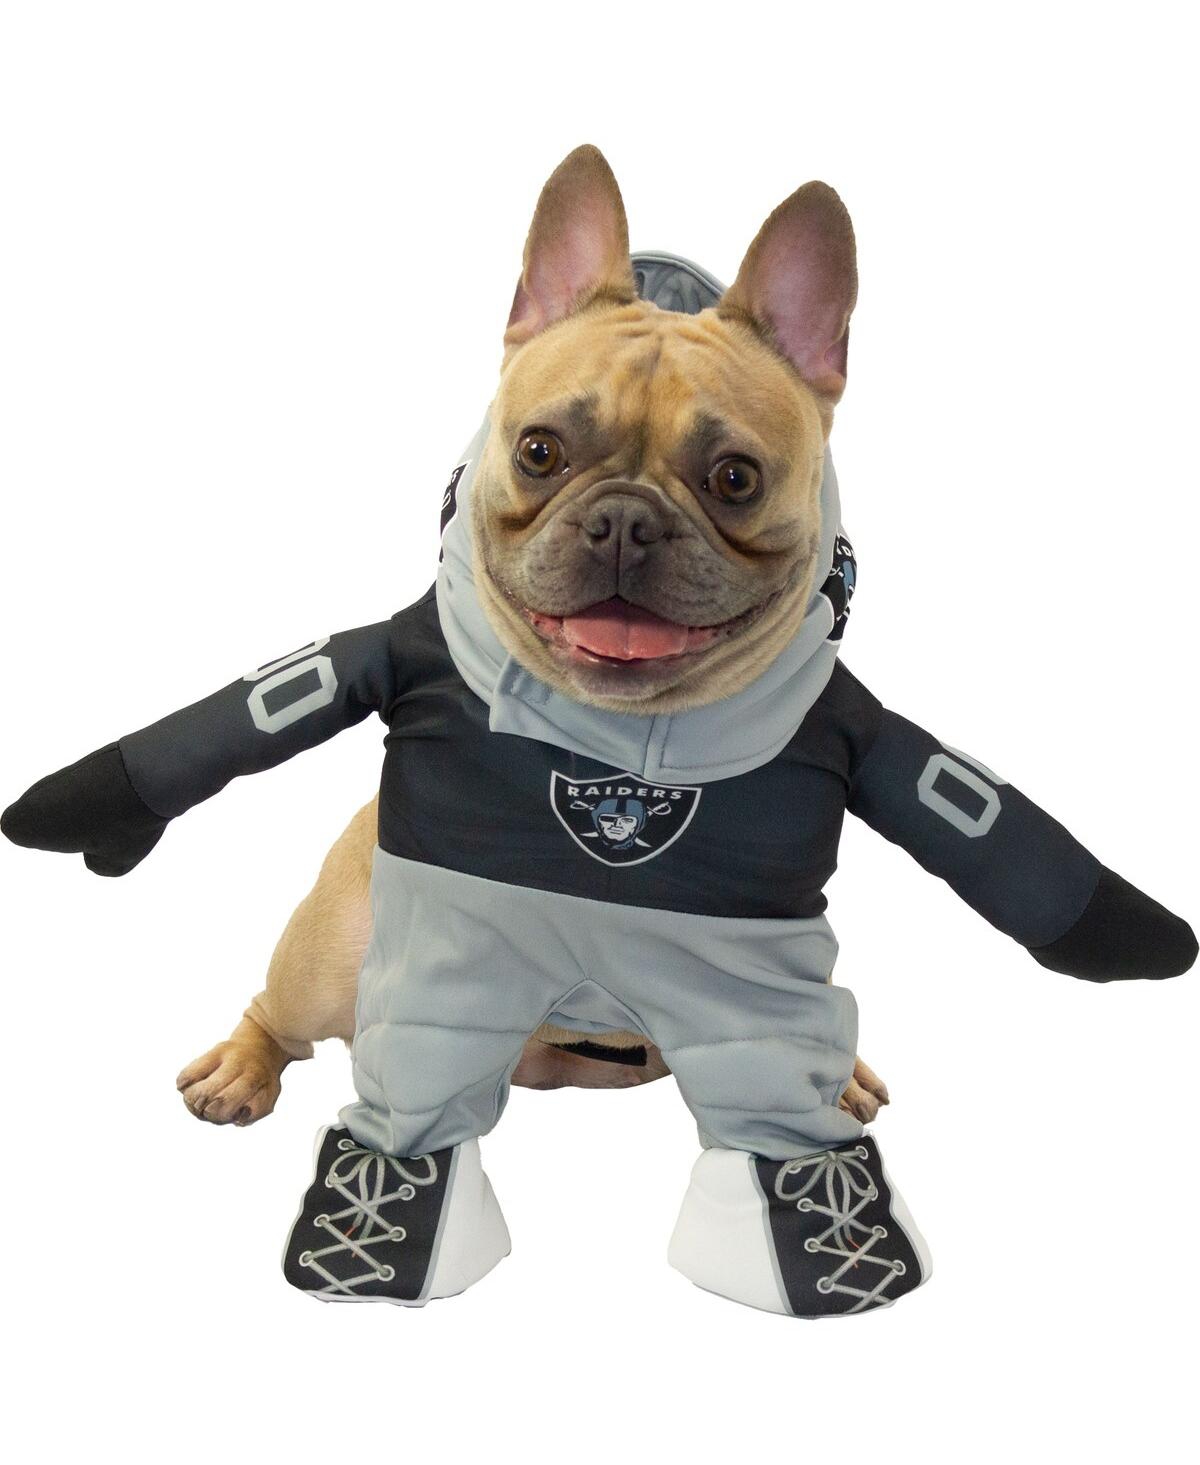 Las Vegas Raiders Running Dog Costume - Black